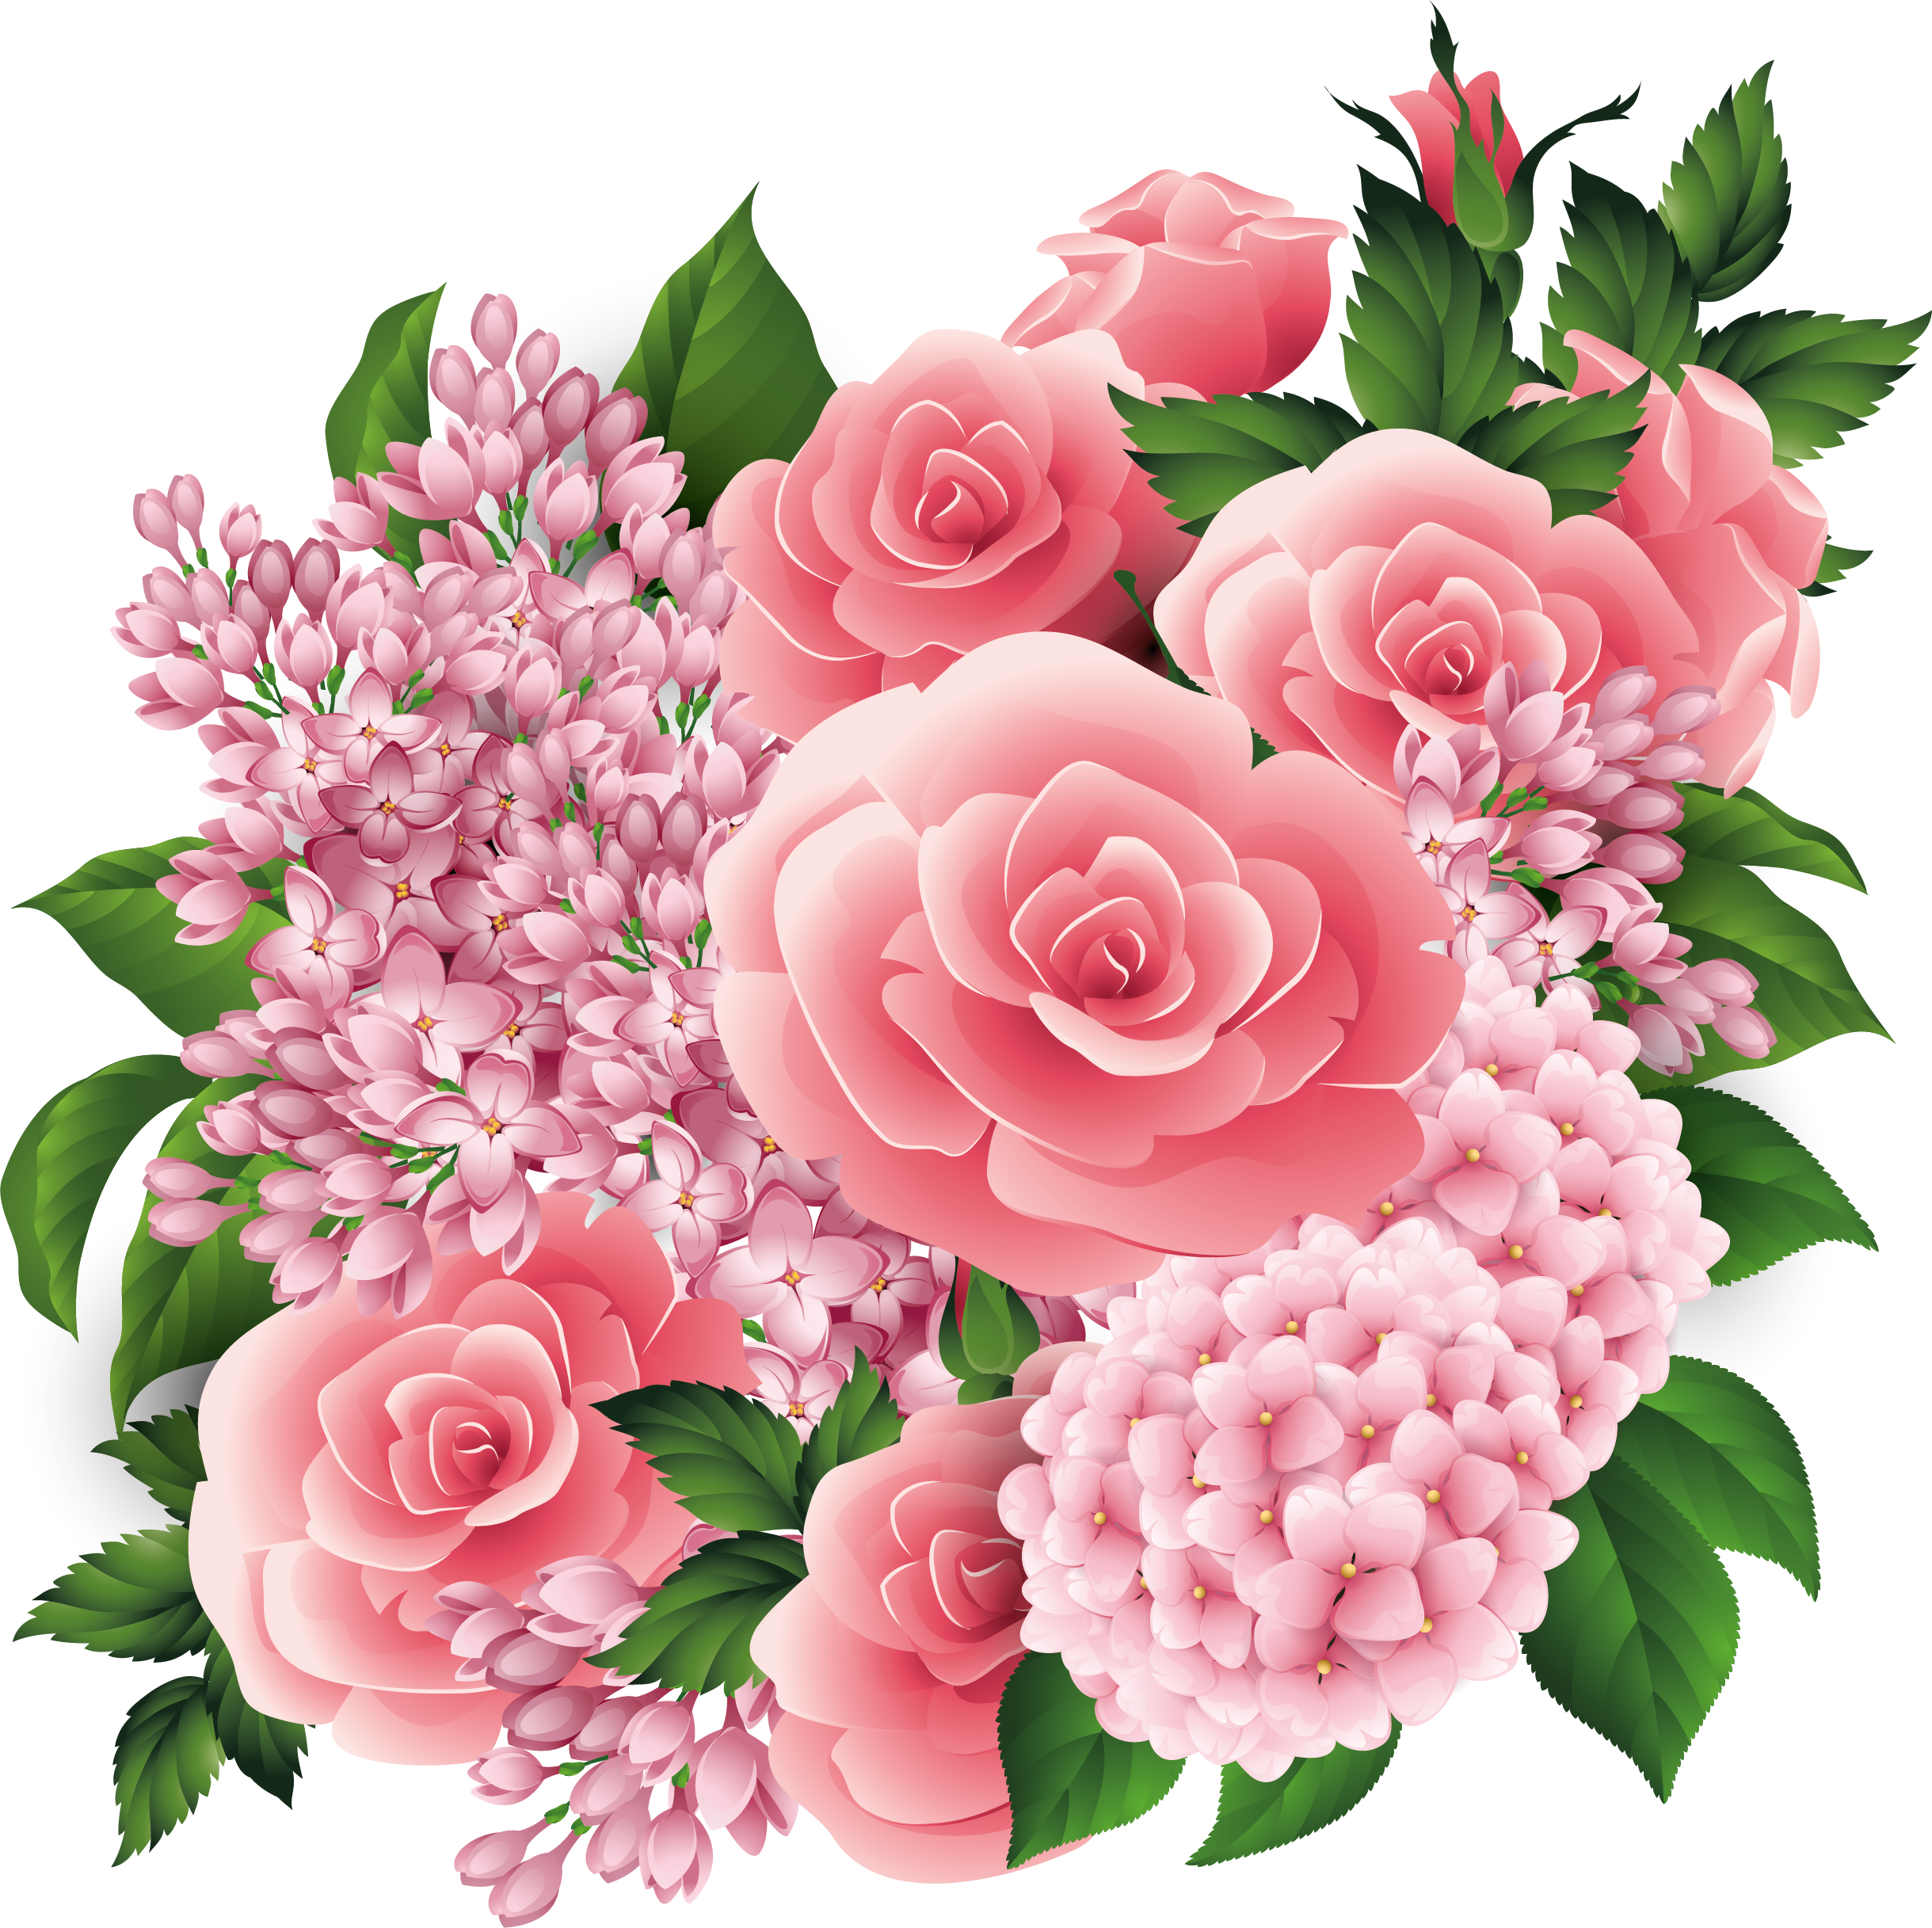 My Design / Beautiful Flowers - Beautiful Rose Design Hd (2439x2434)